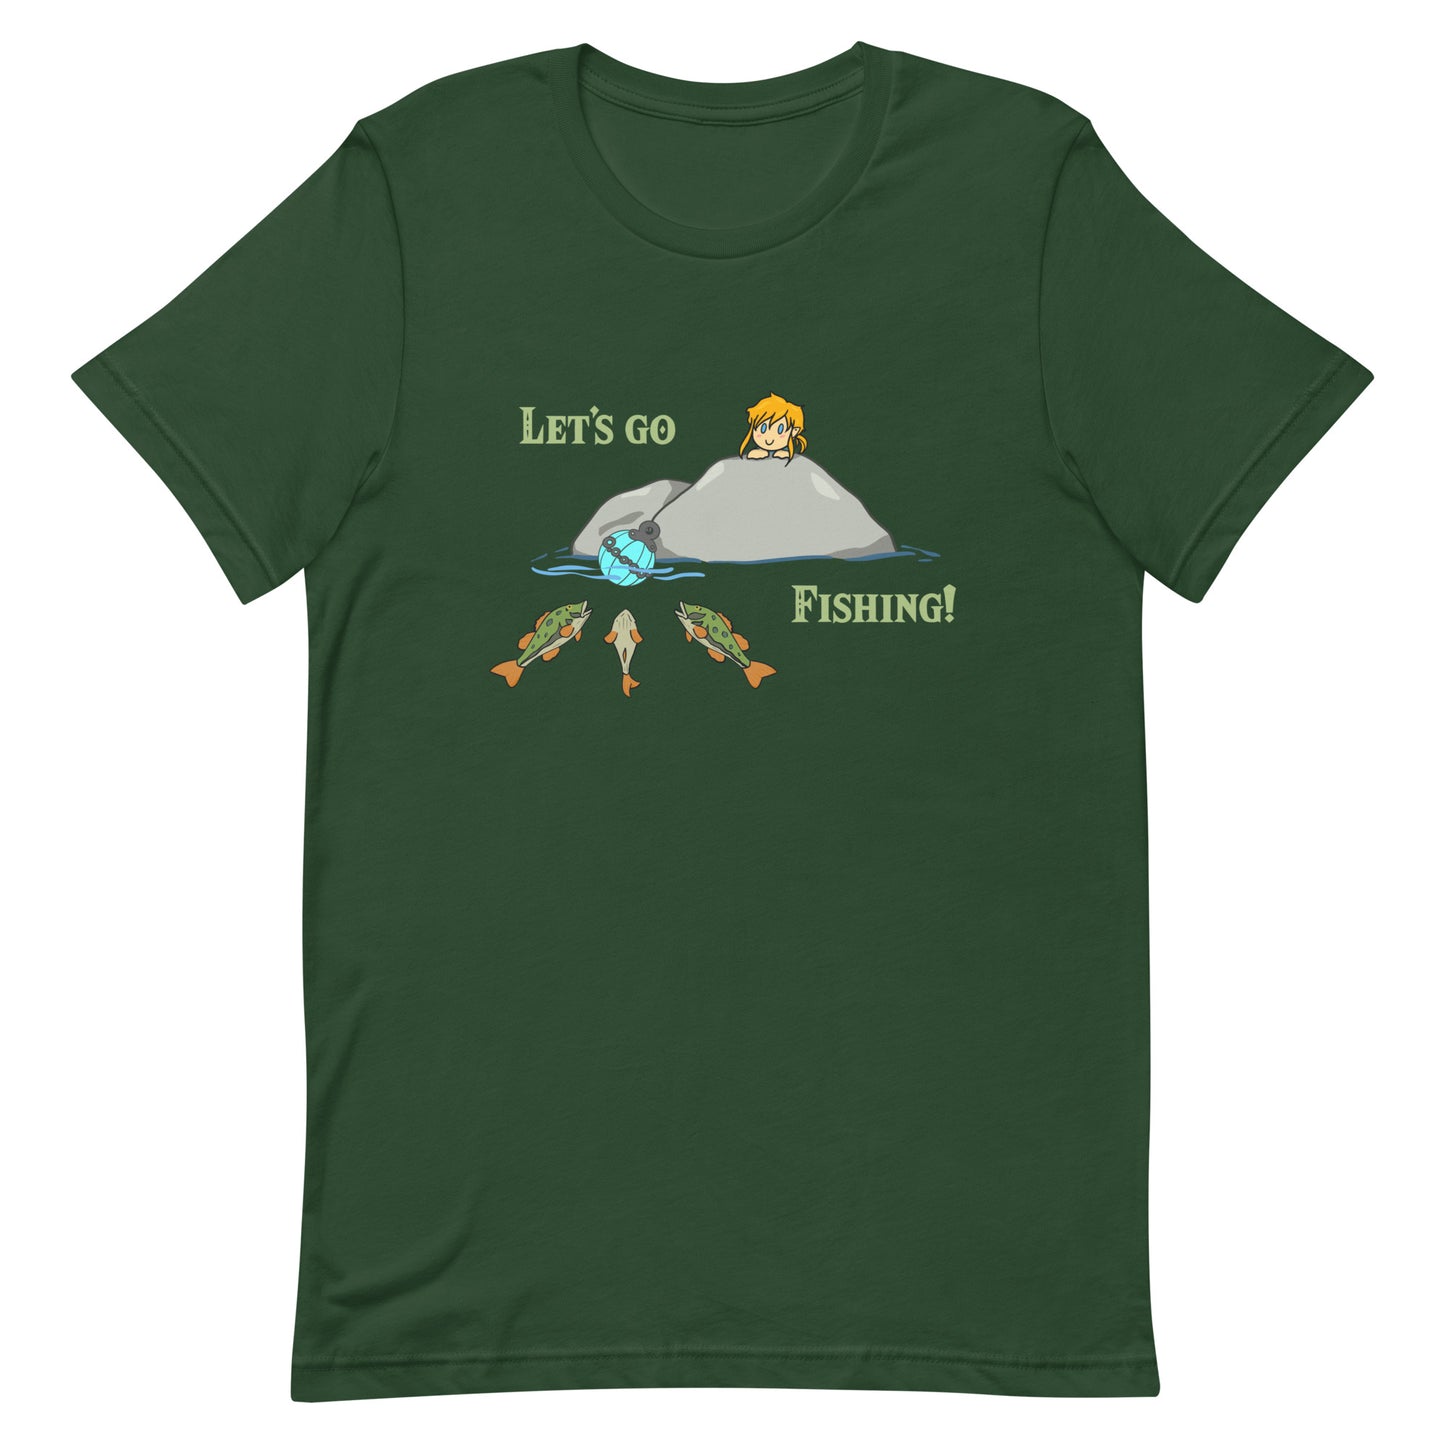 Let's Go Fishing! T-shirt